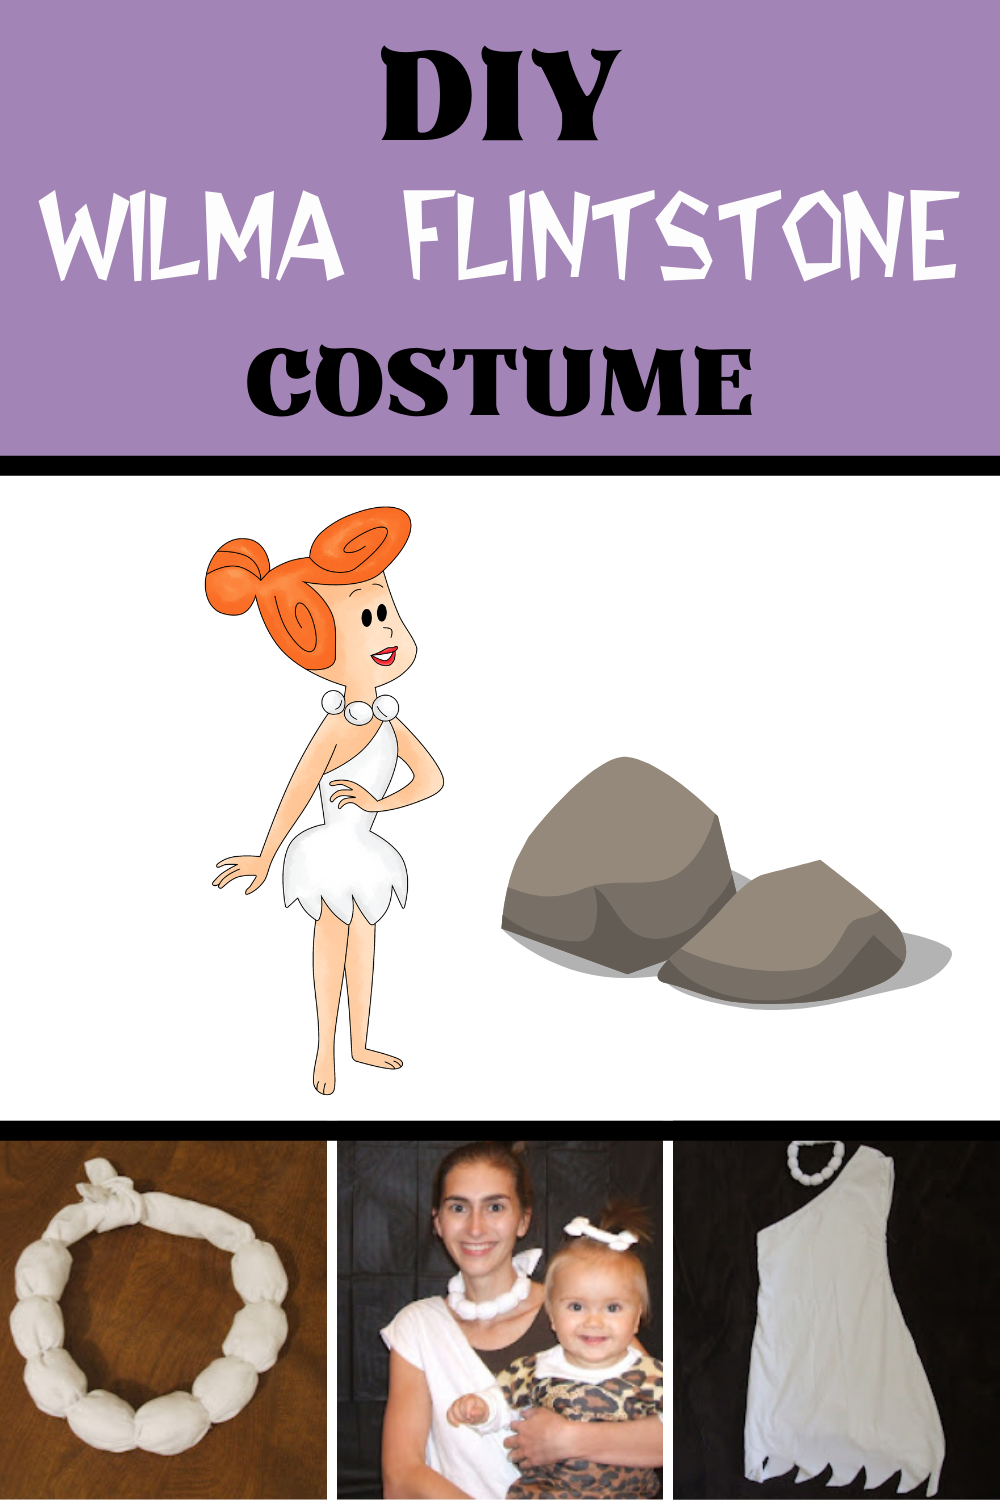 wilma flintstone costume